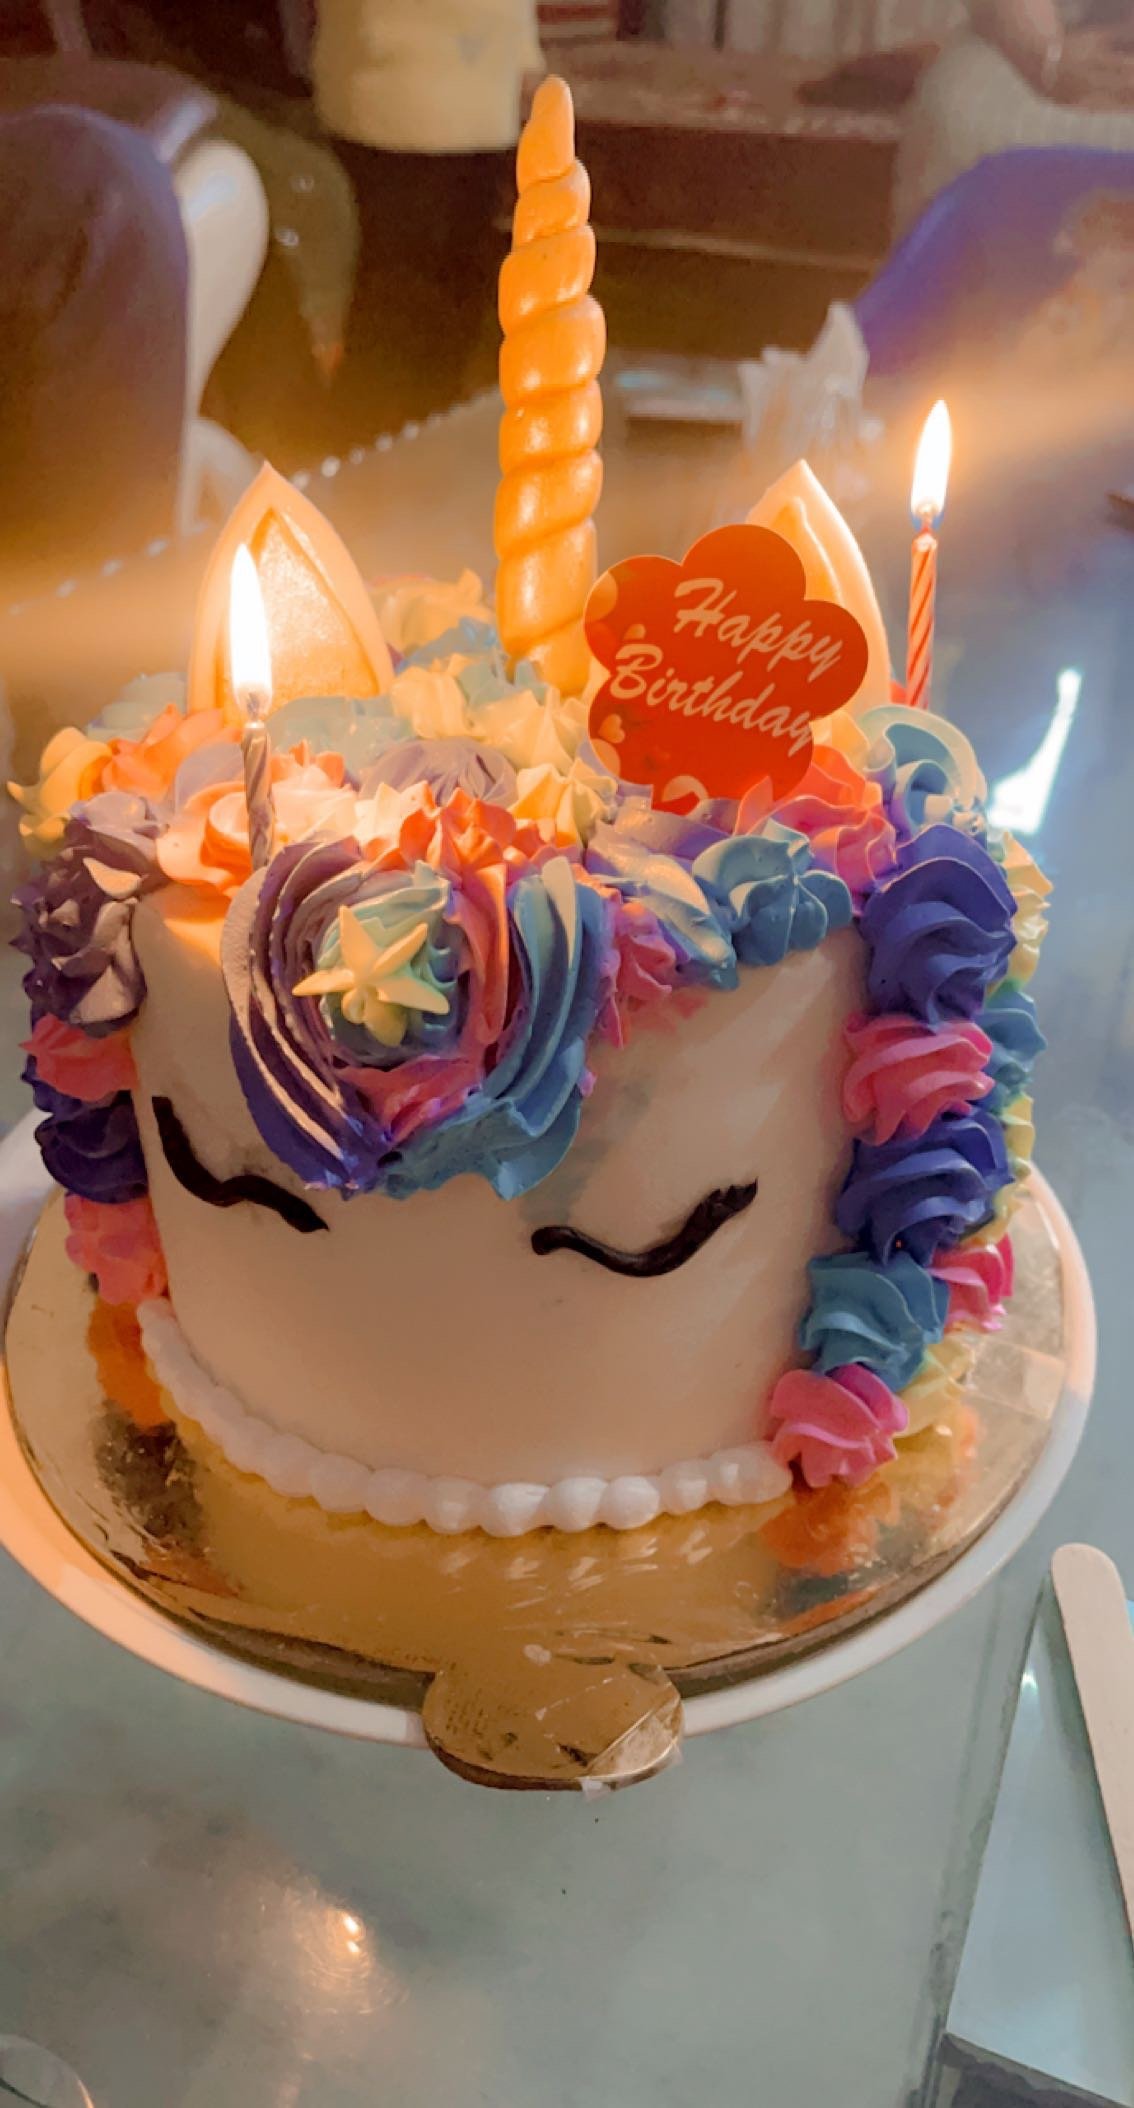 Pin by manoranjan pradhan on Android phone wallpaper | Simple cake designs, Happy  birthday flower cake, Cake designs